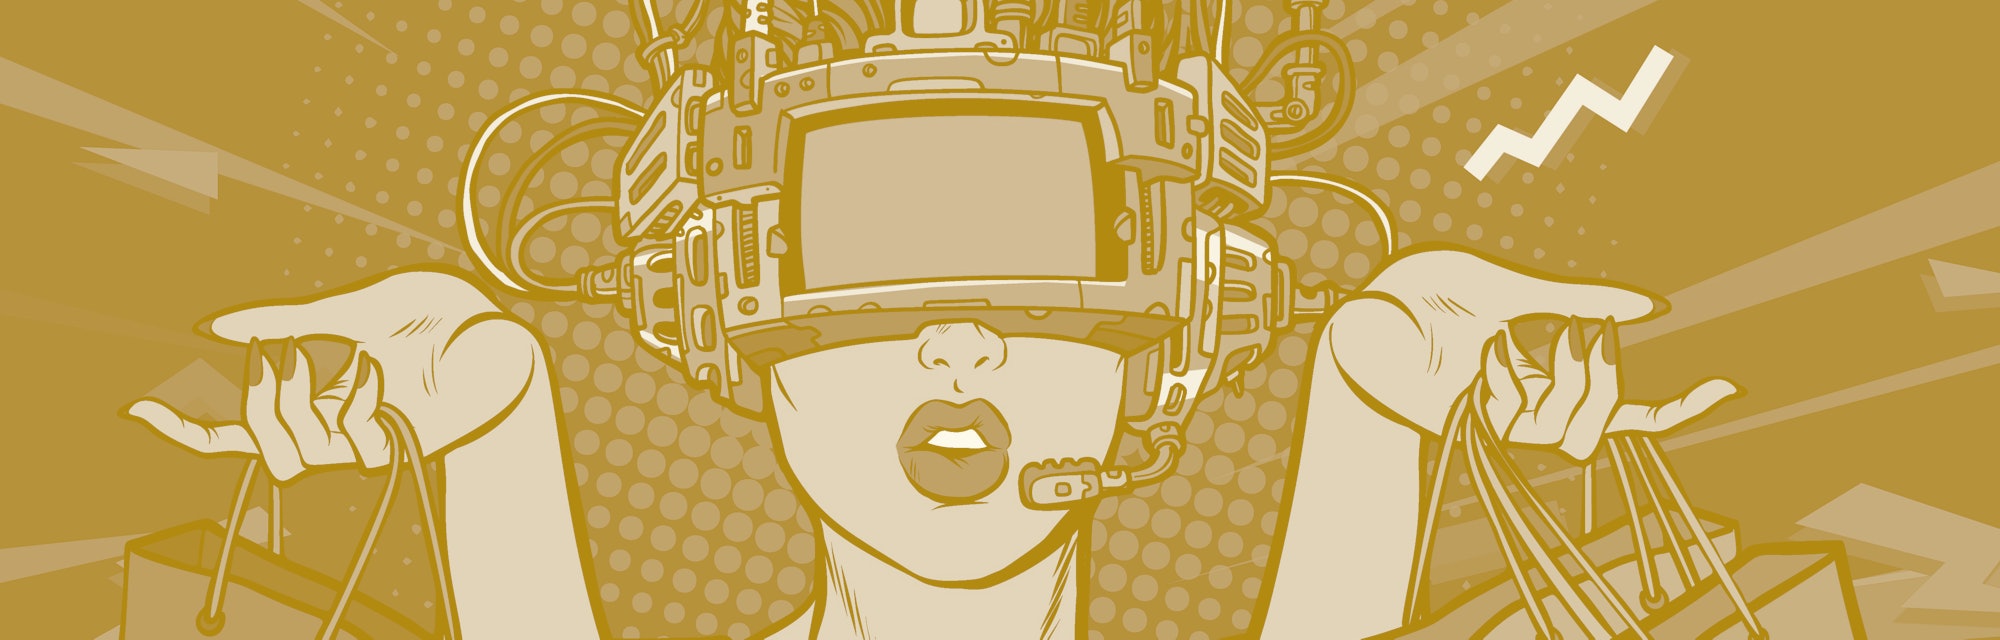 woman shopping on sale. virtual reality VR glasses. Pop art retro vector illustration vintage kitsch